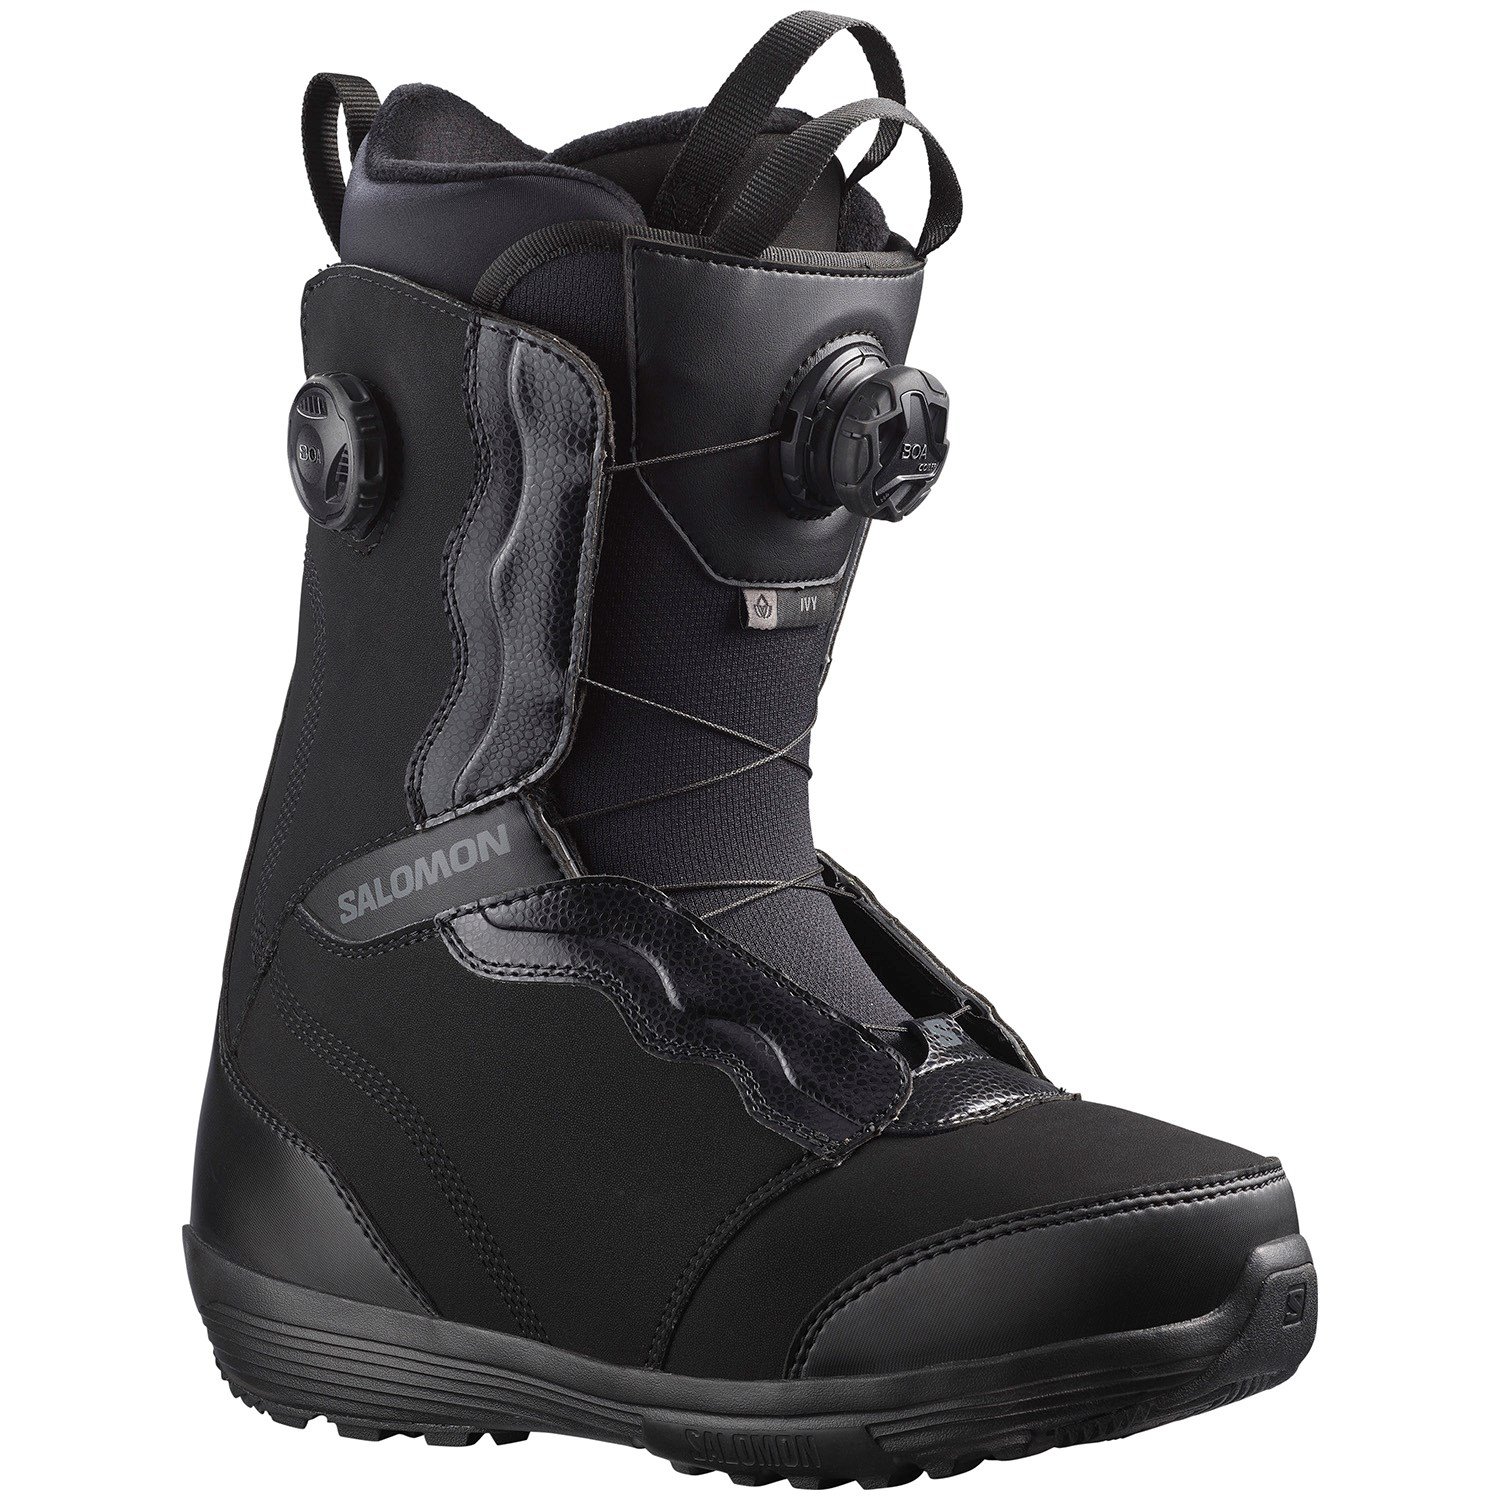 Salomon Ivy Boa SJ Snowboard Boots - Women's | evo